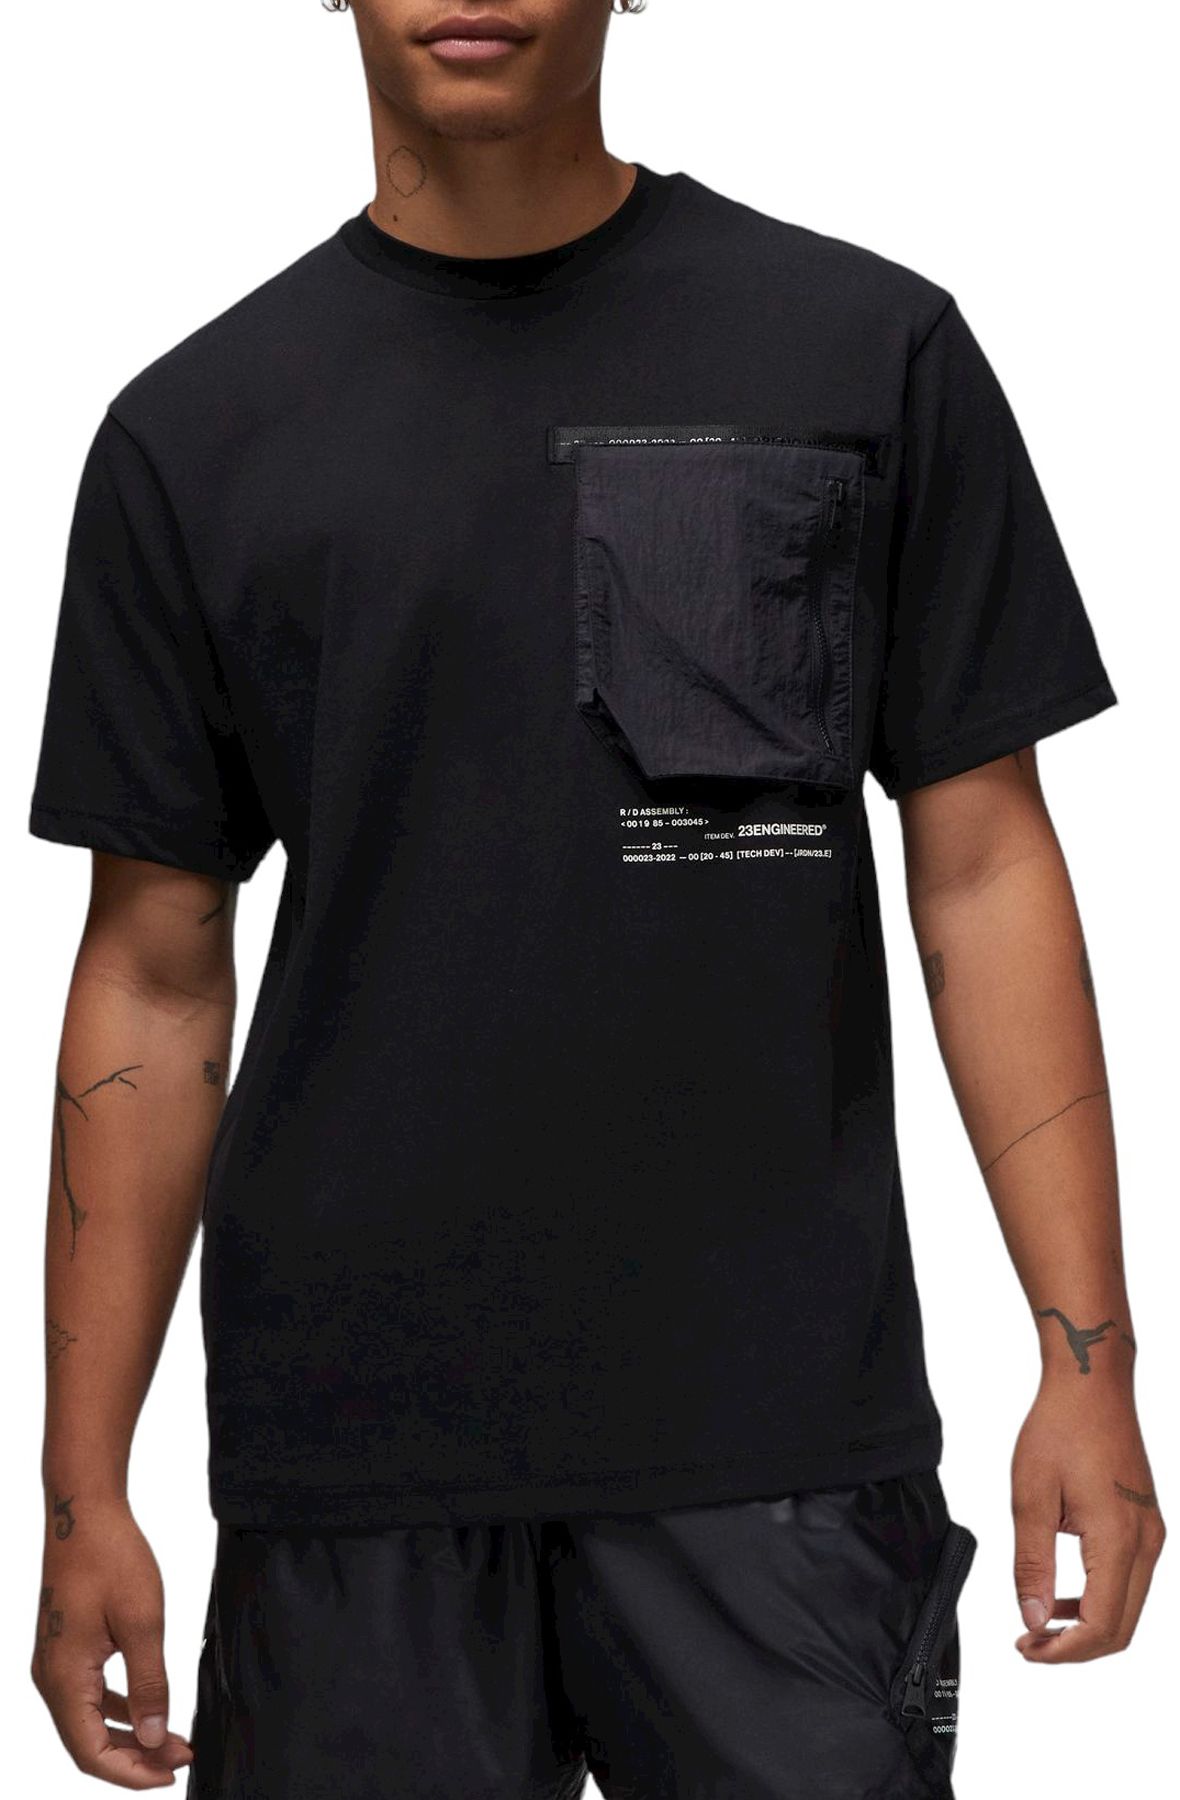 T-shirt Jordan Jordan 23 Engineered Statement T-Shirt DM1388-030